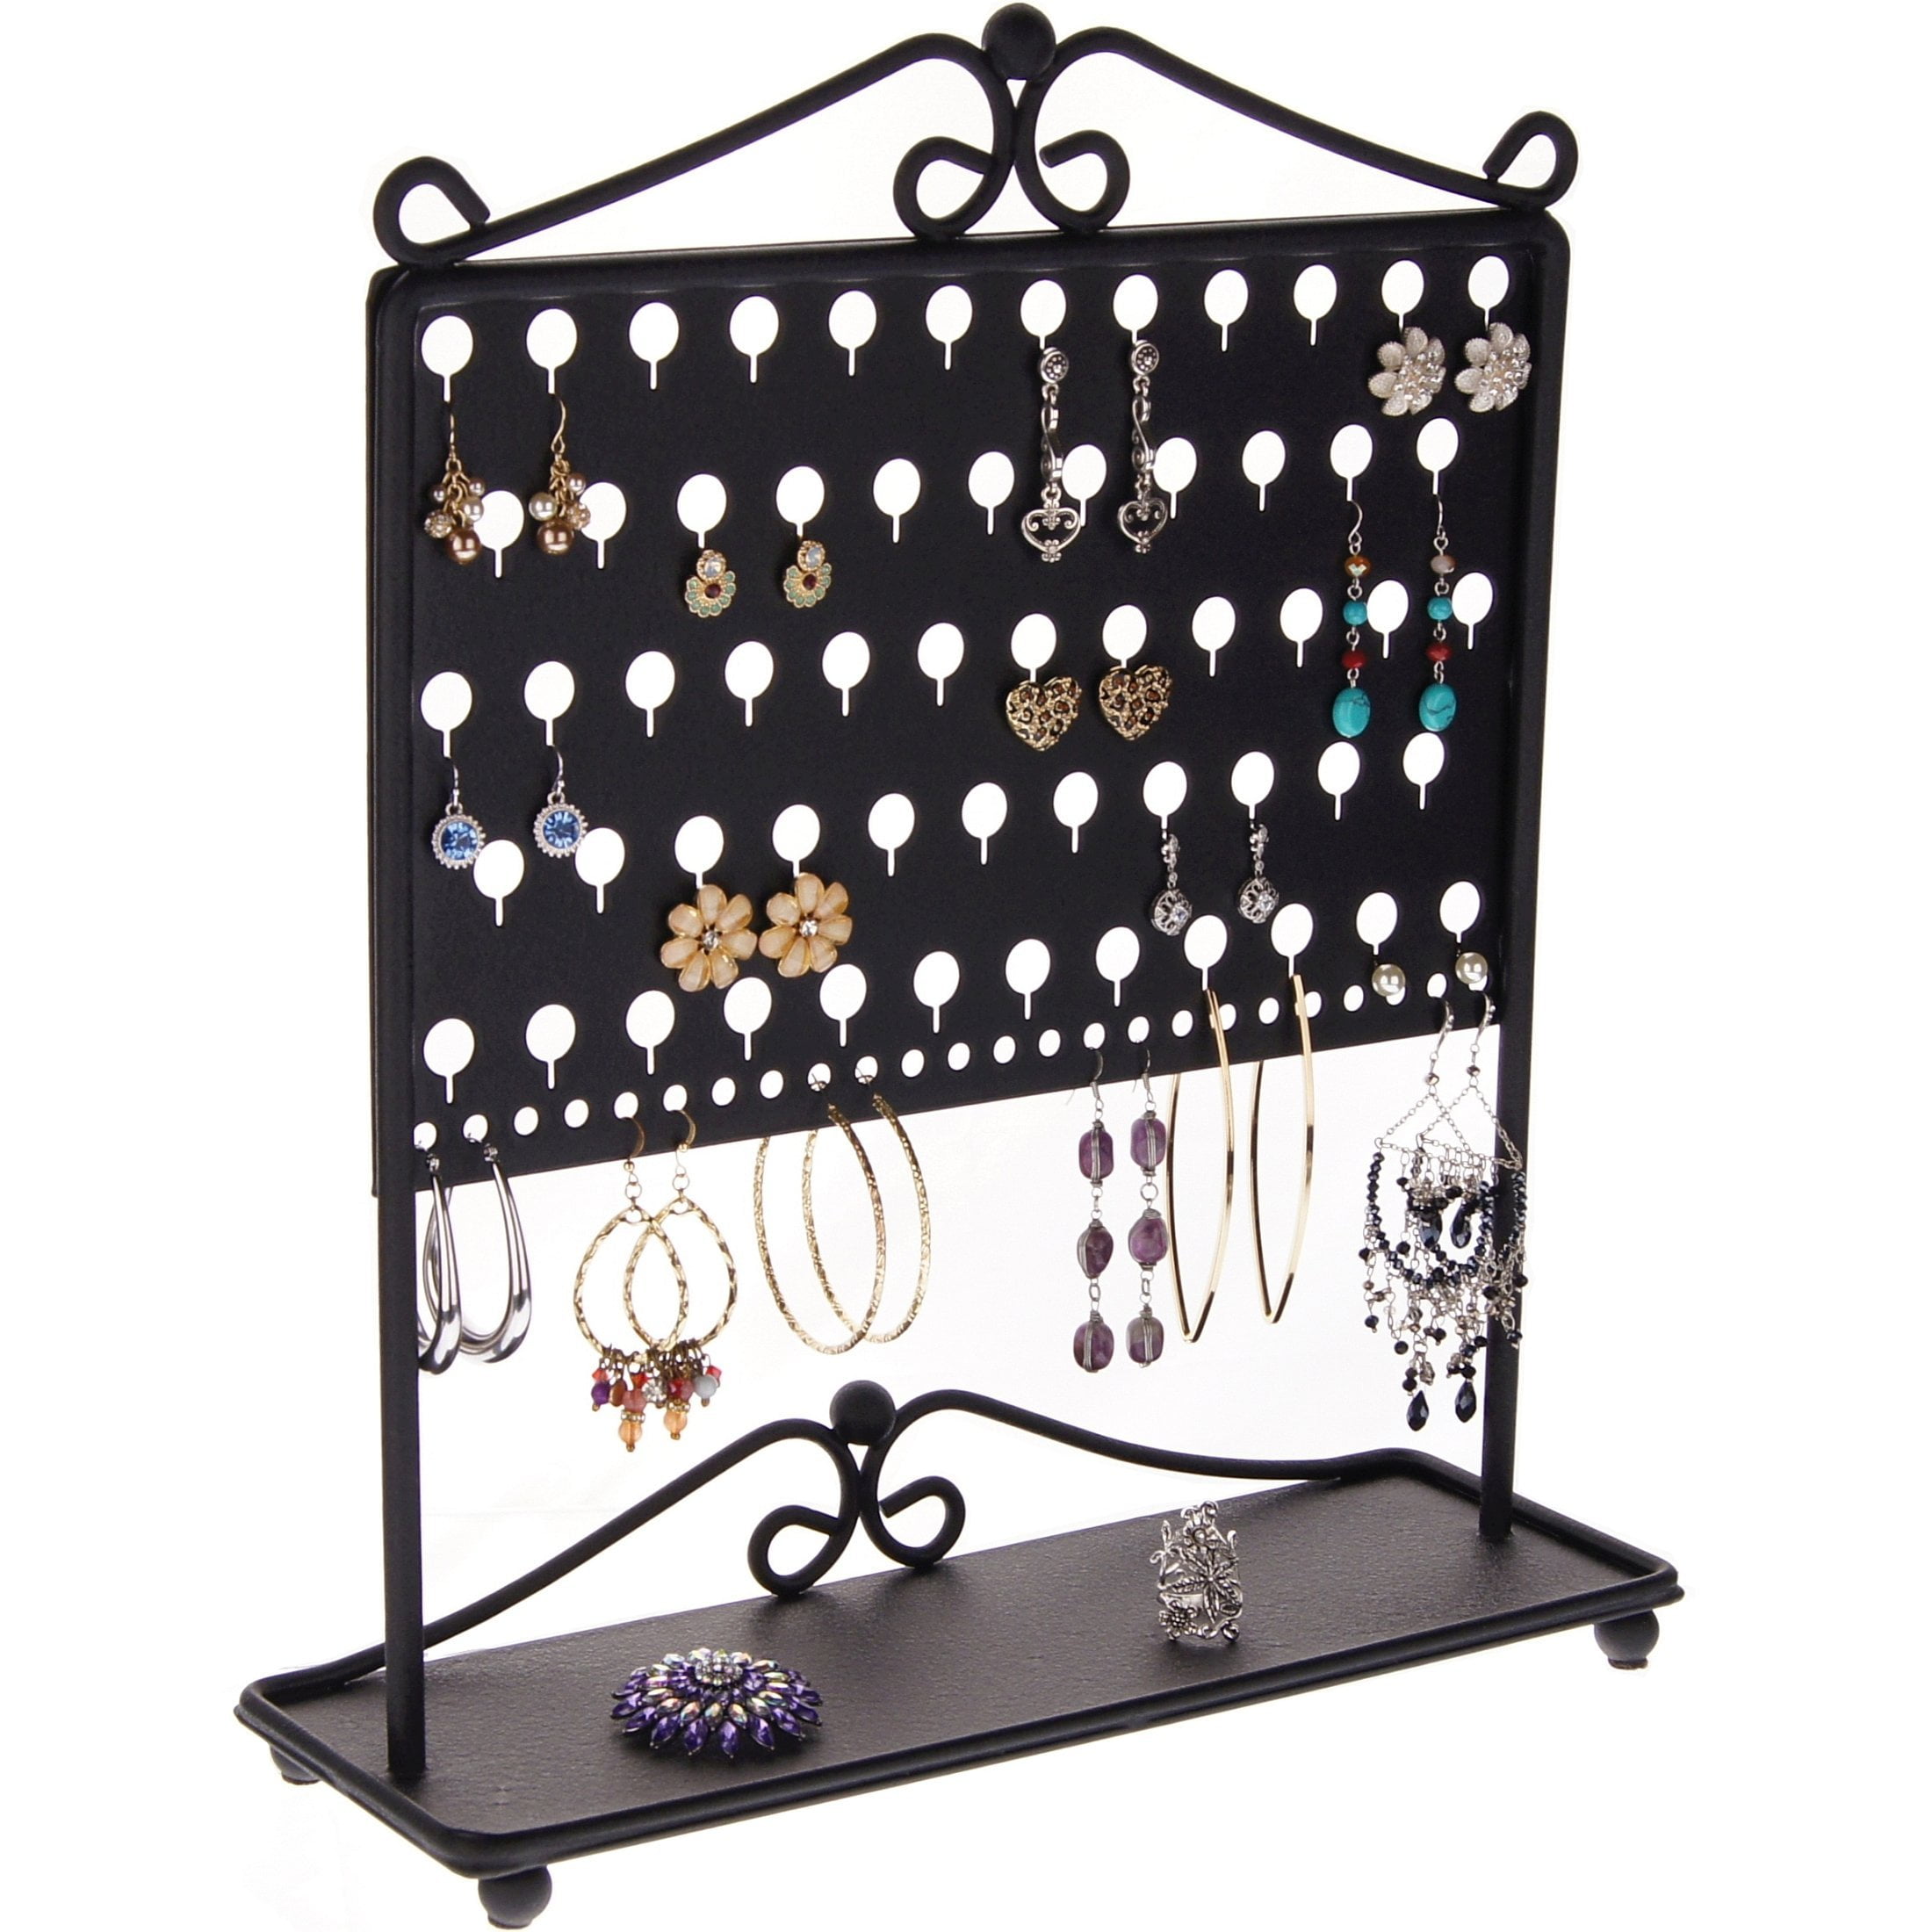 Holders Stud Stand Jewelry Organizer Storage Holder Earring Display Rack 